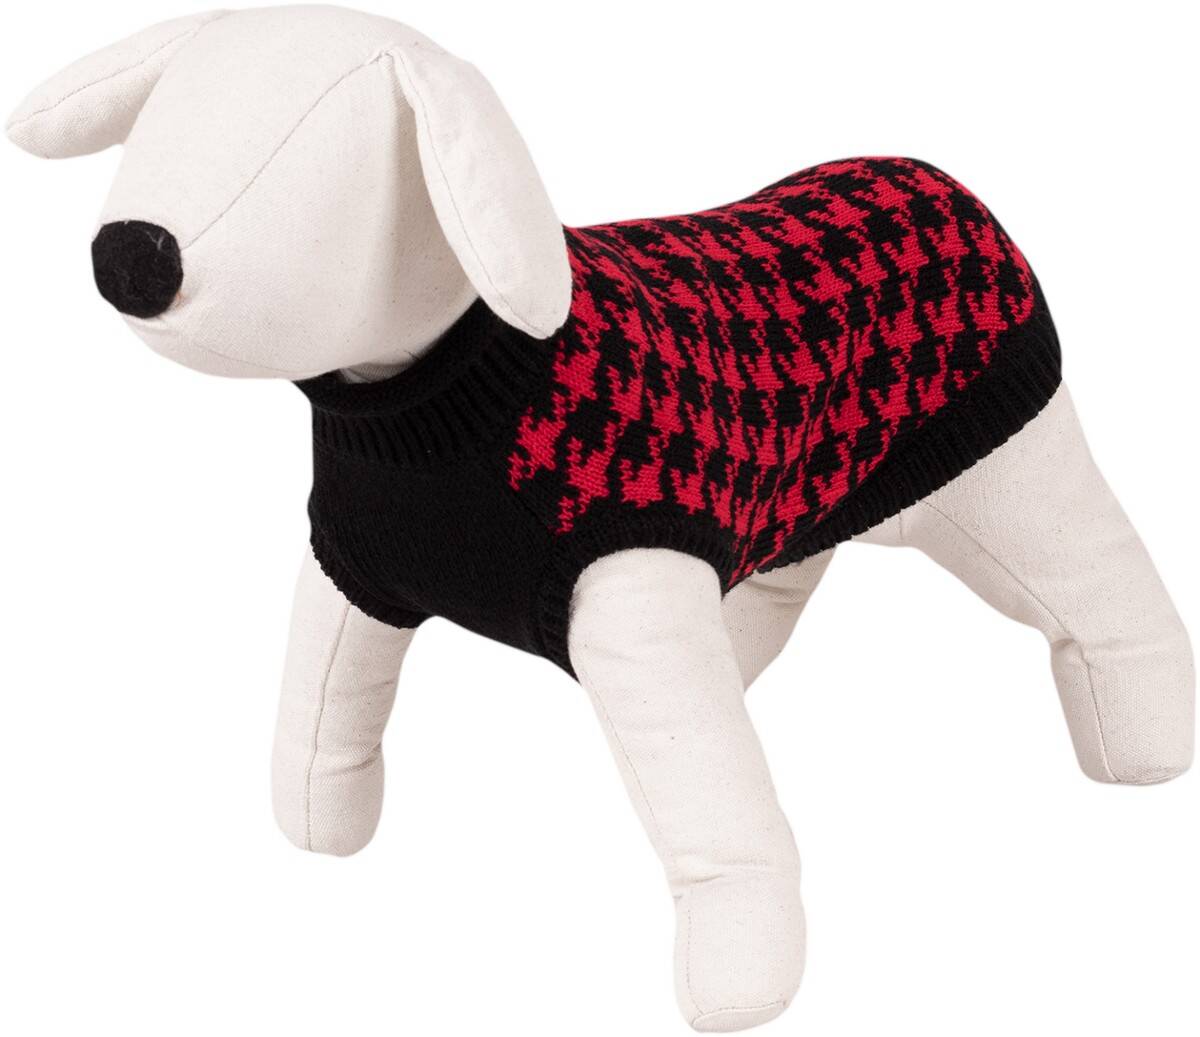 Dog Sweater / Houndstooth Pattern - Happet 480M - Black & Red  - 30cm